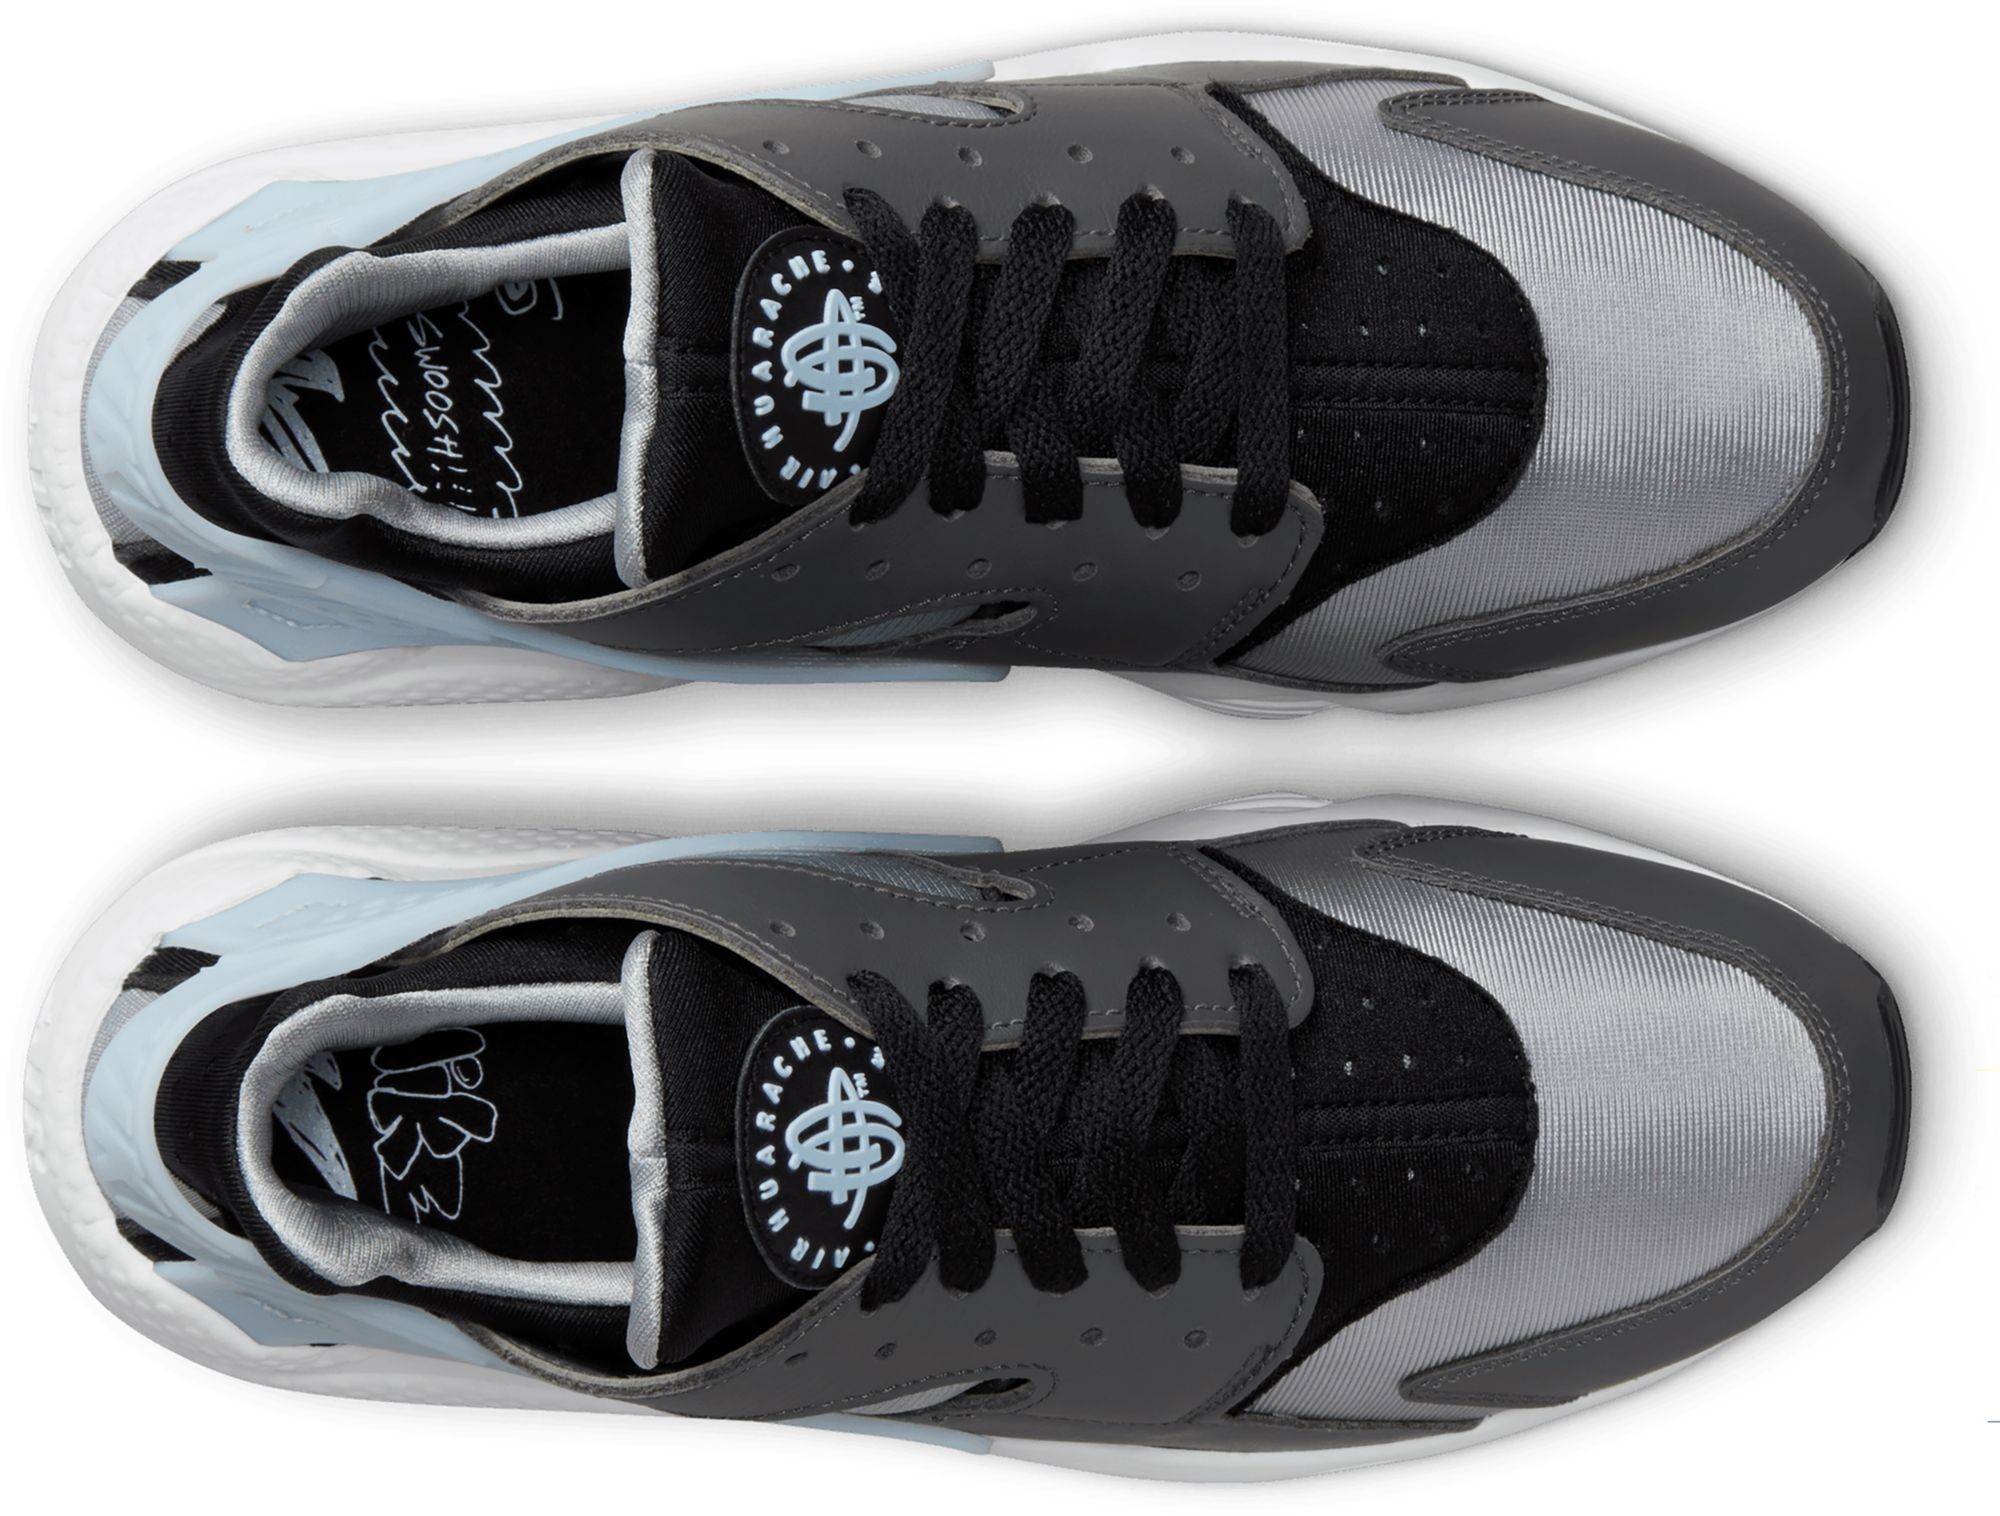 Nike Men's Air Huarache Shoes